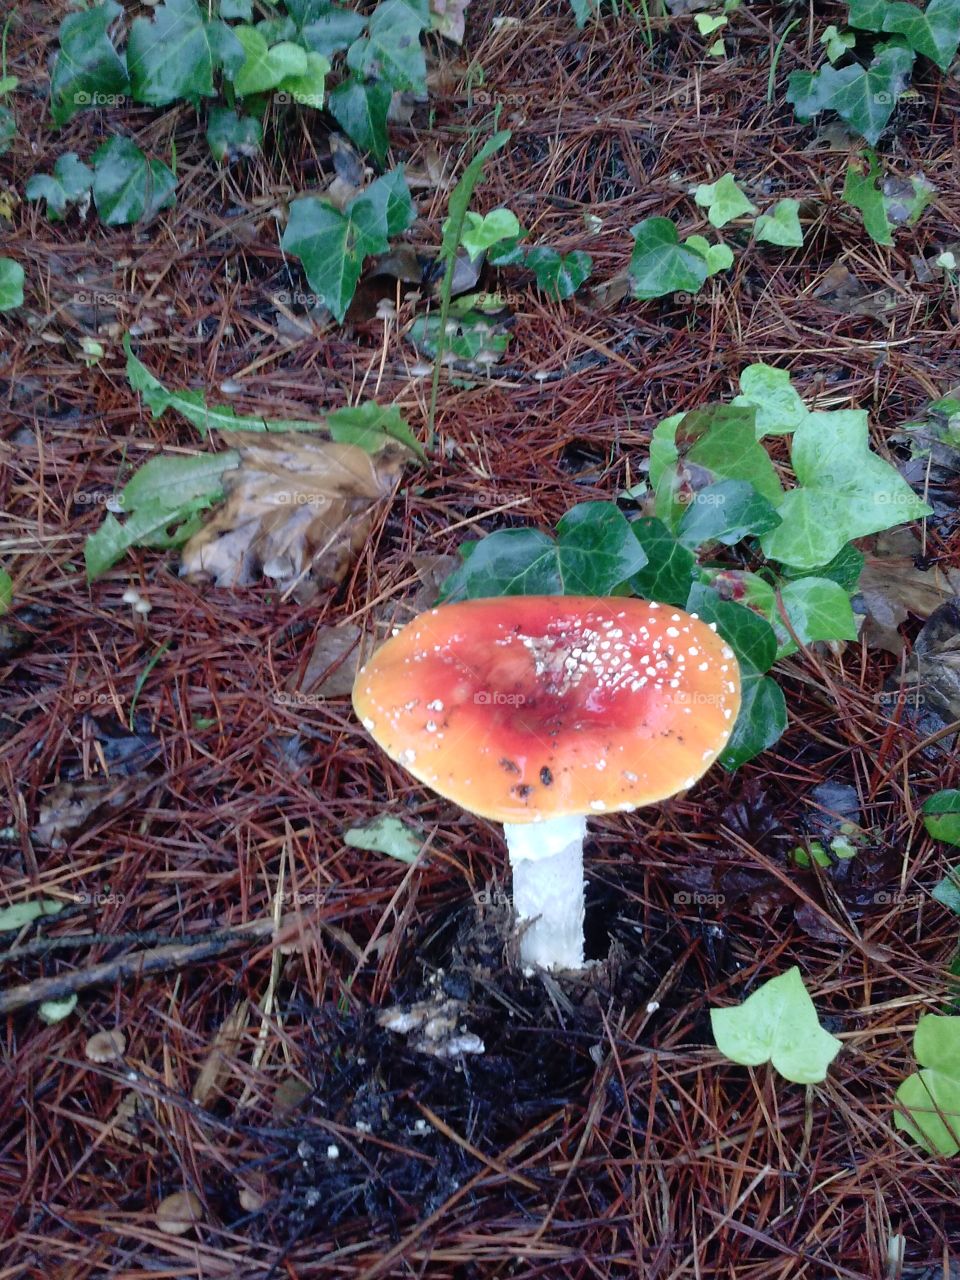 fungi. humboldt county